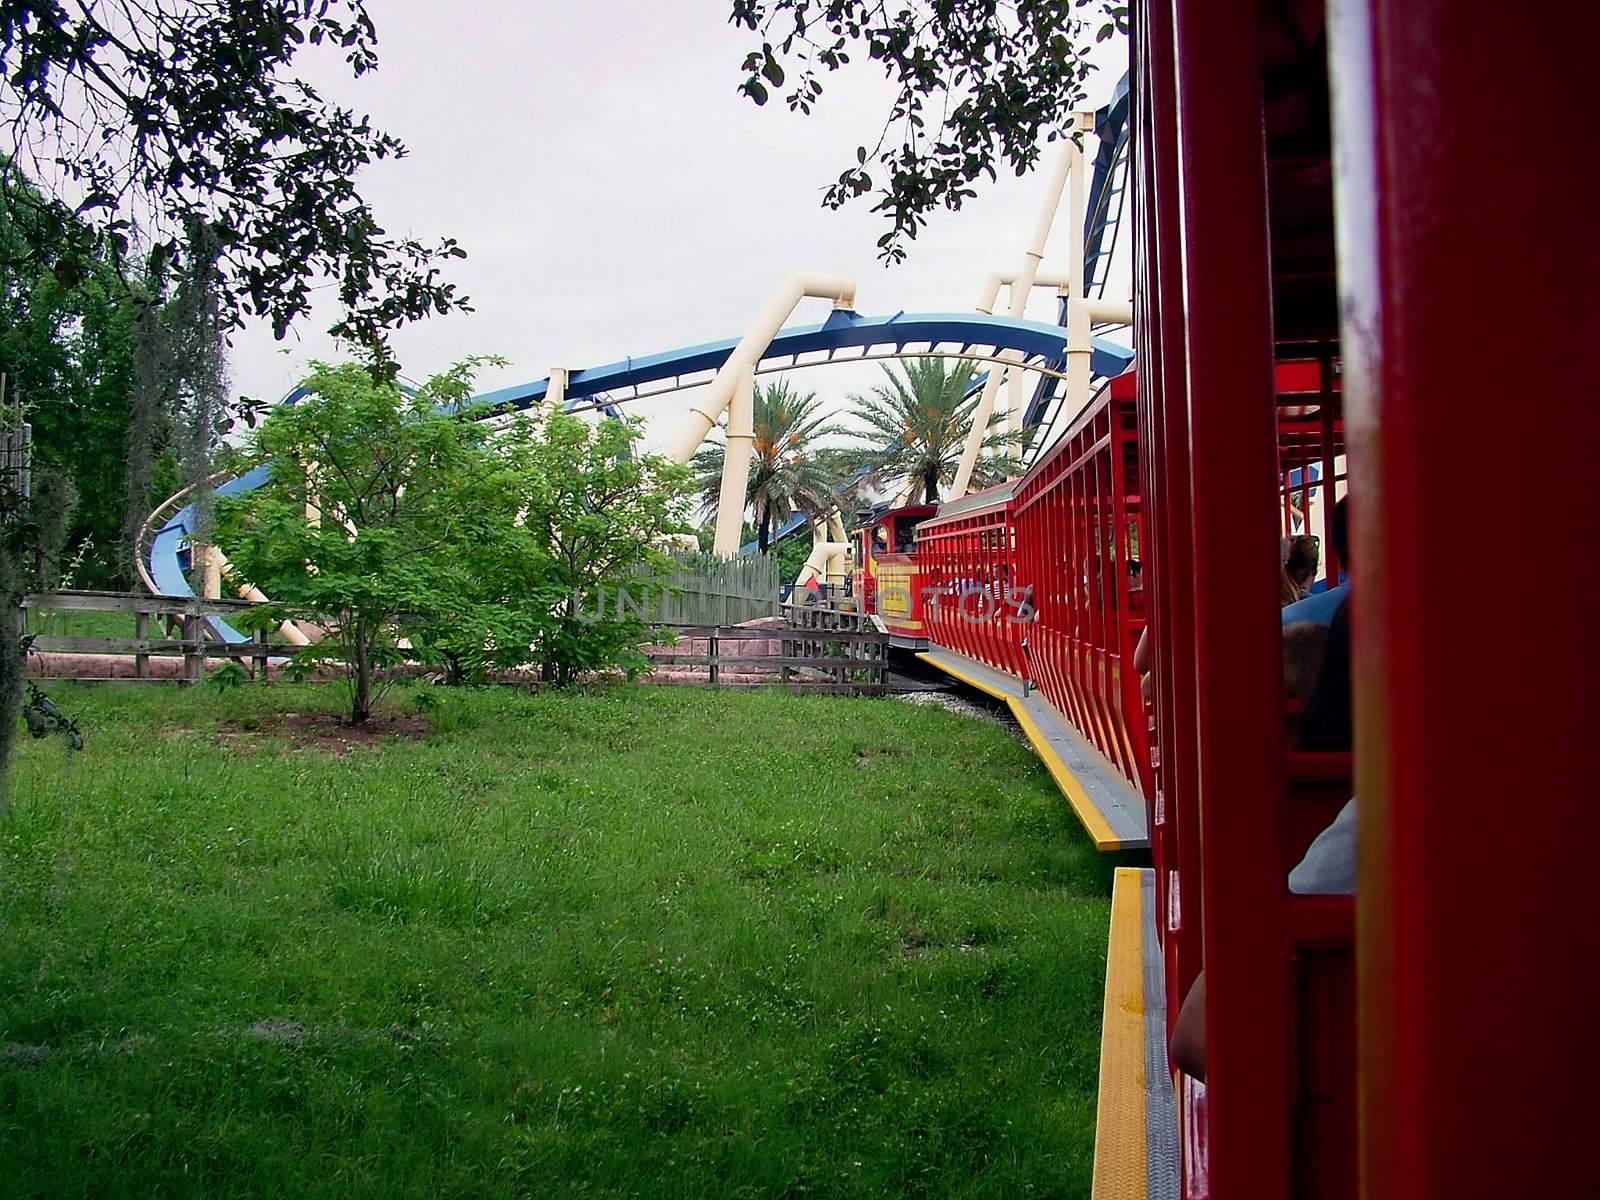 Theme Park Train Ride by PhotoWorks